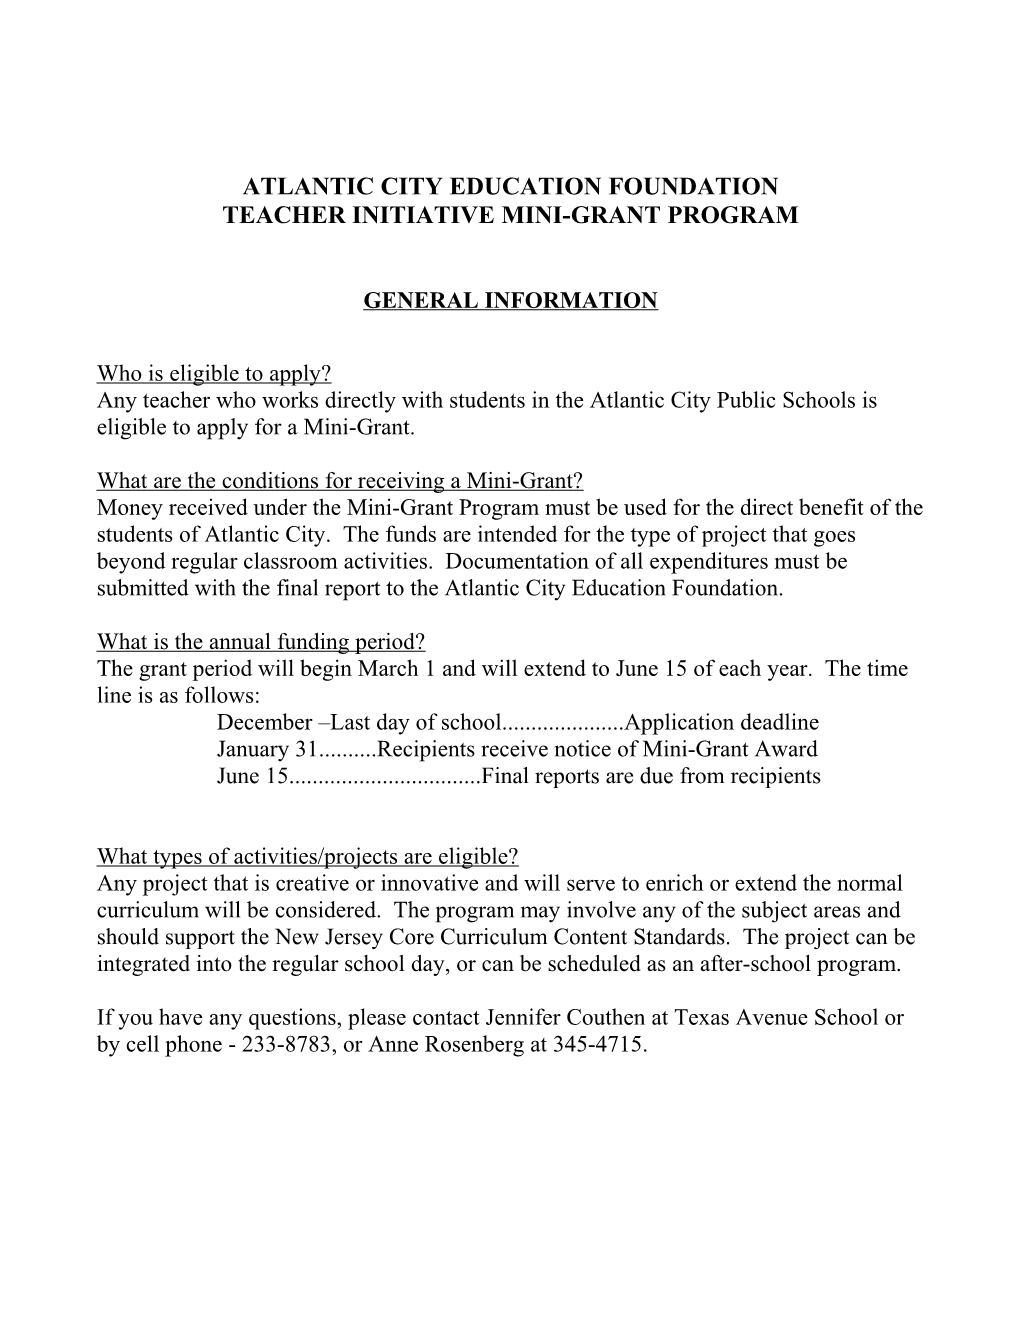 Atlantic City Education Foundation